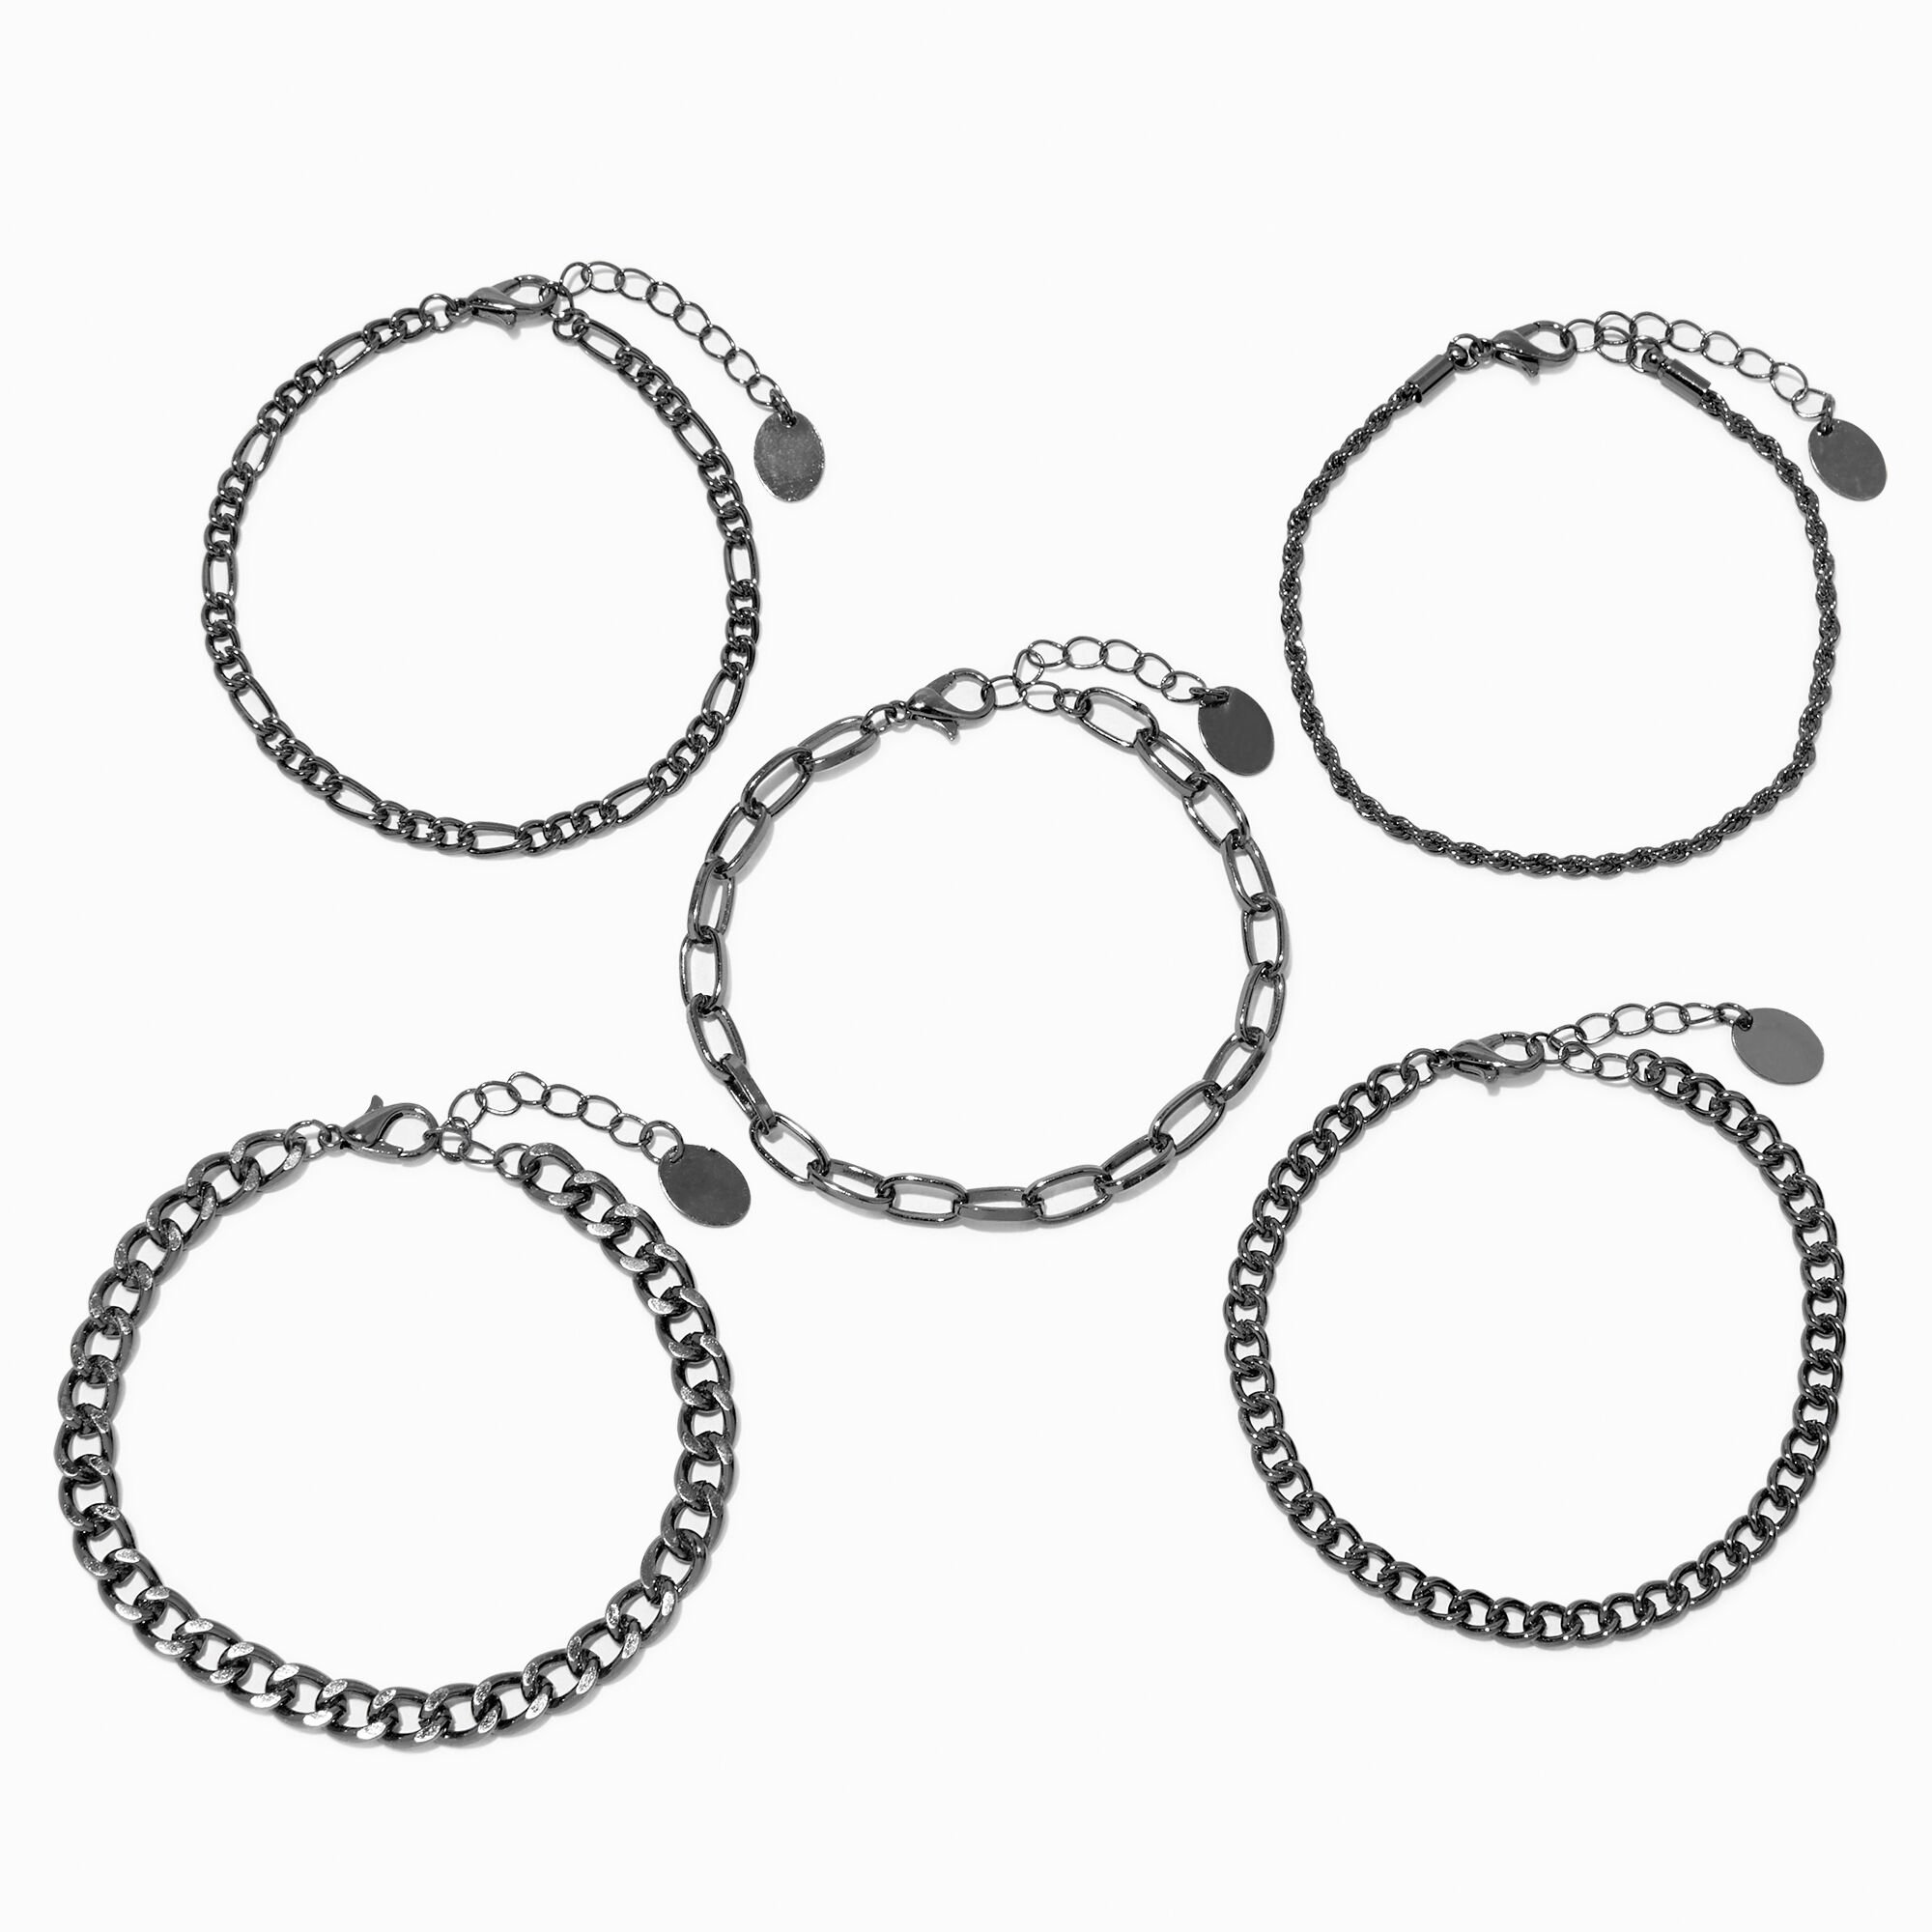 View Claires Hematite Woven Chain Bracelet Set 5 Pack information